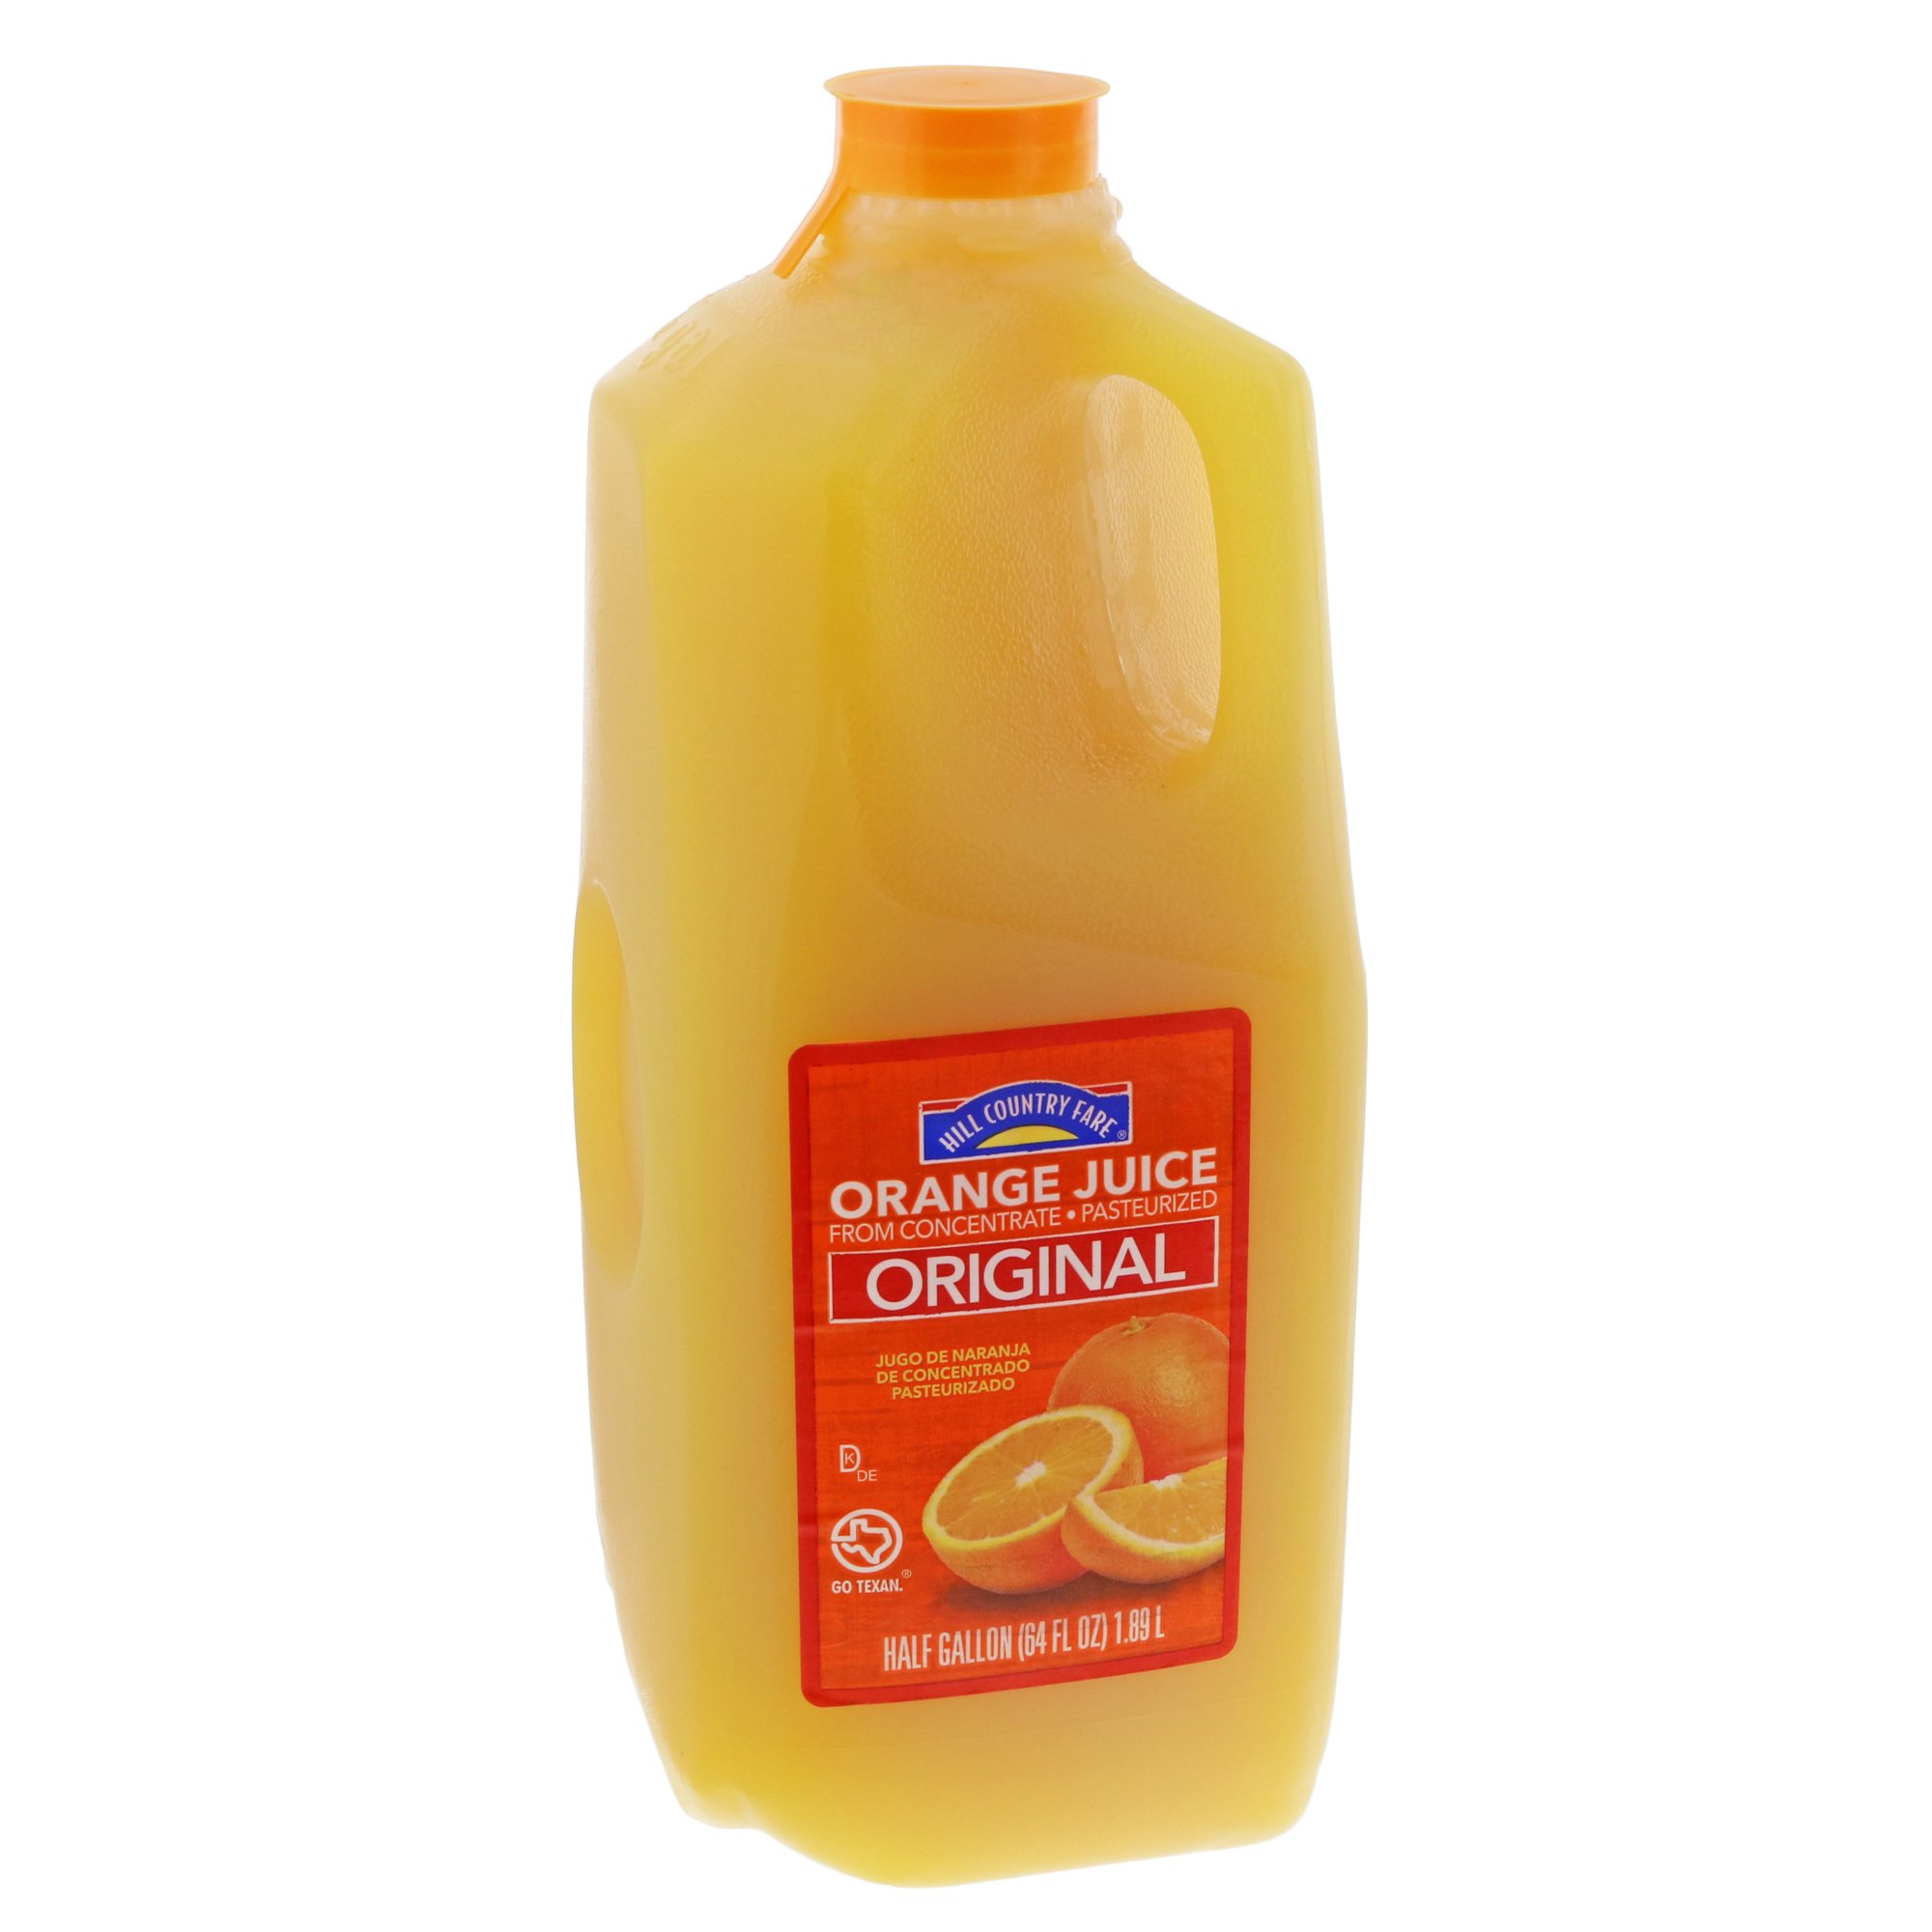 Hill Country Fare Original Orange Juice - Shop Orange Juice at HEB